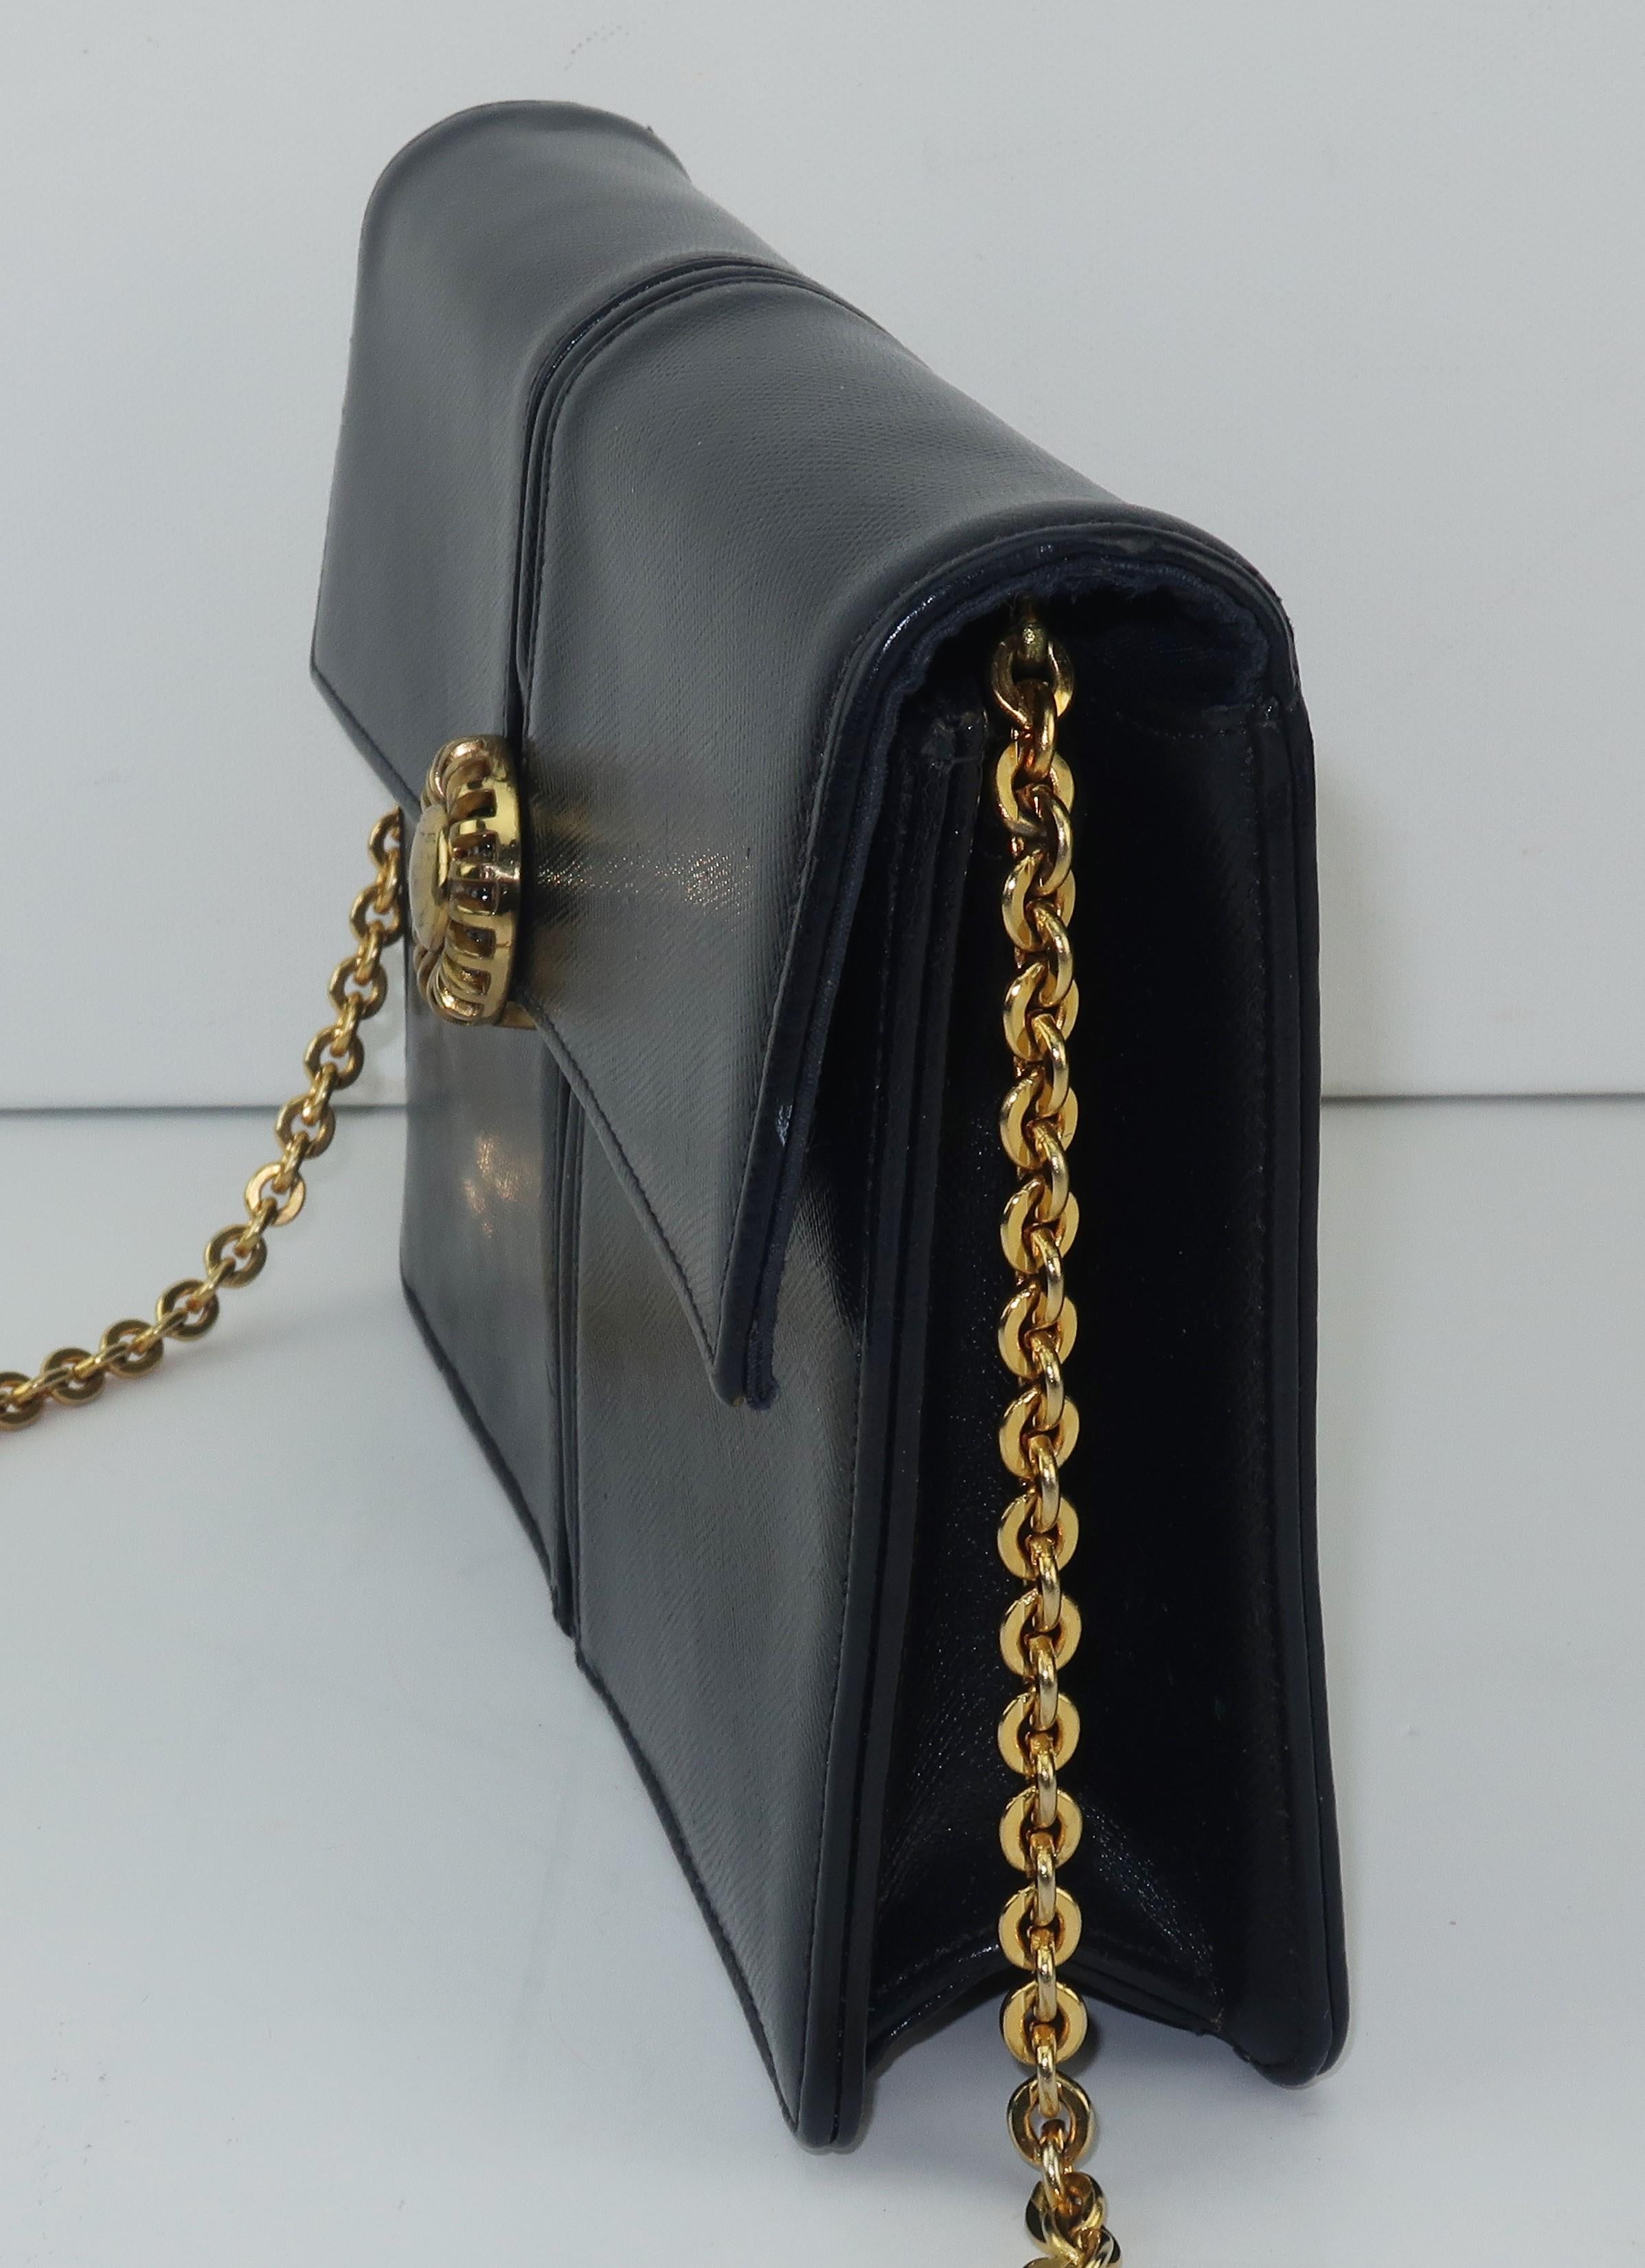 black leather handbag with chain strap